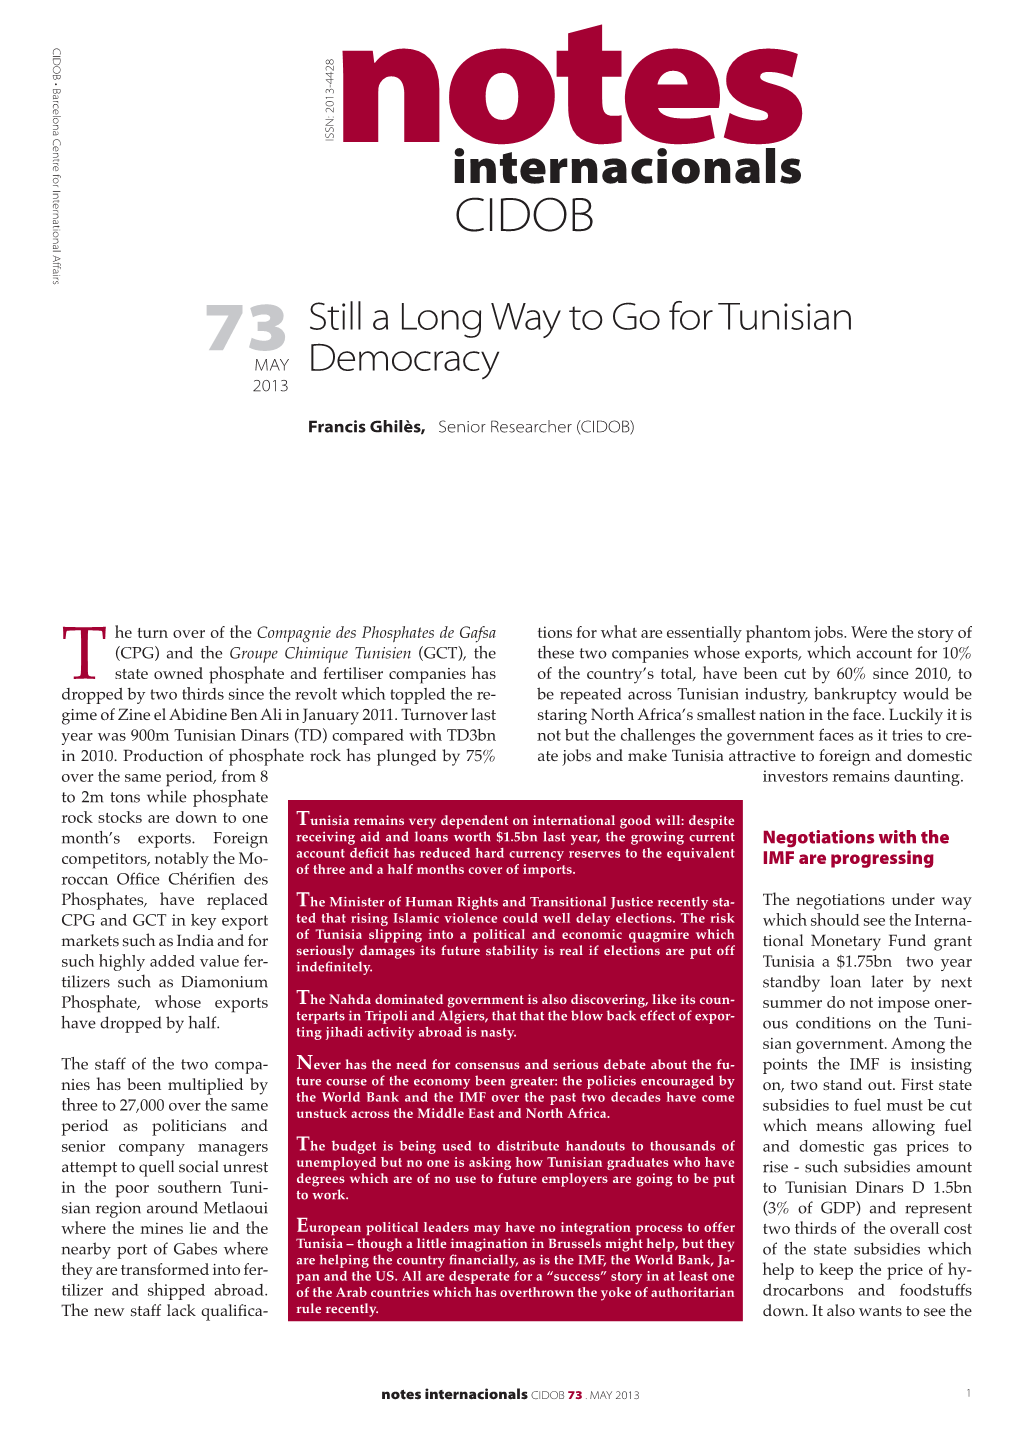 Internacionals CIDOB 73 Still a Long Way to Go for Tunisian MAY Democracy 2013